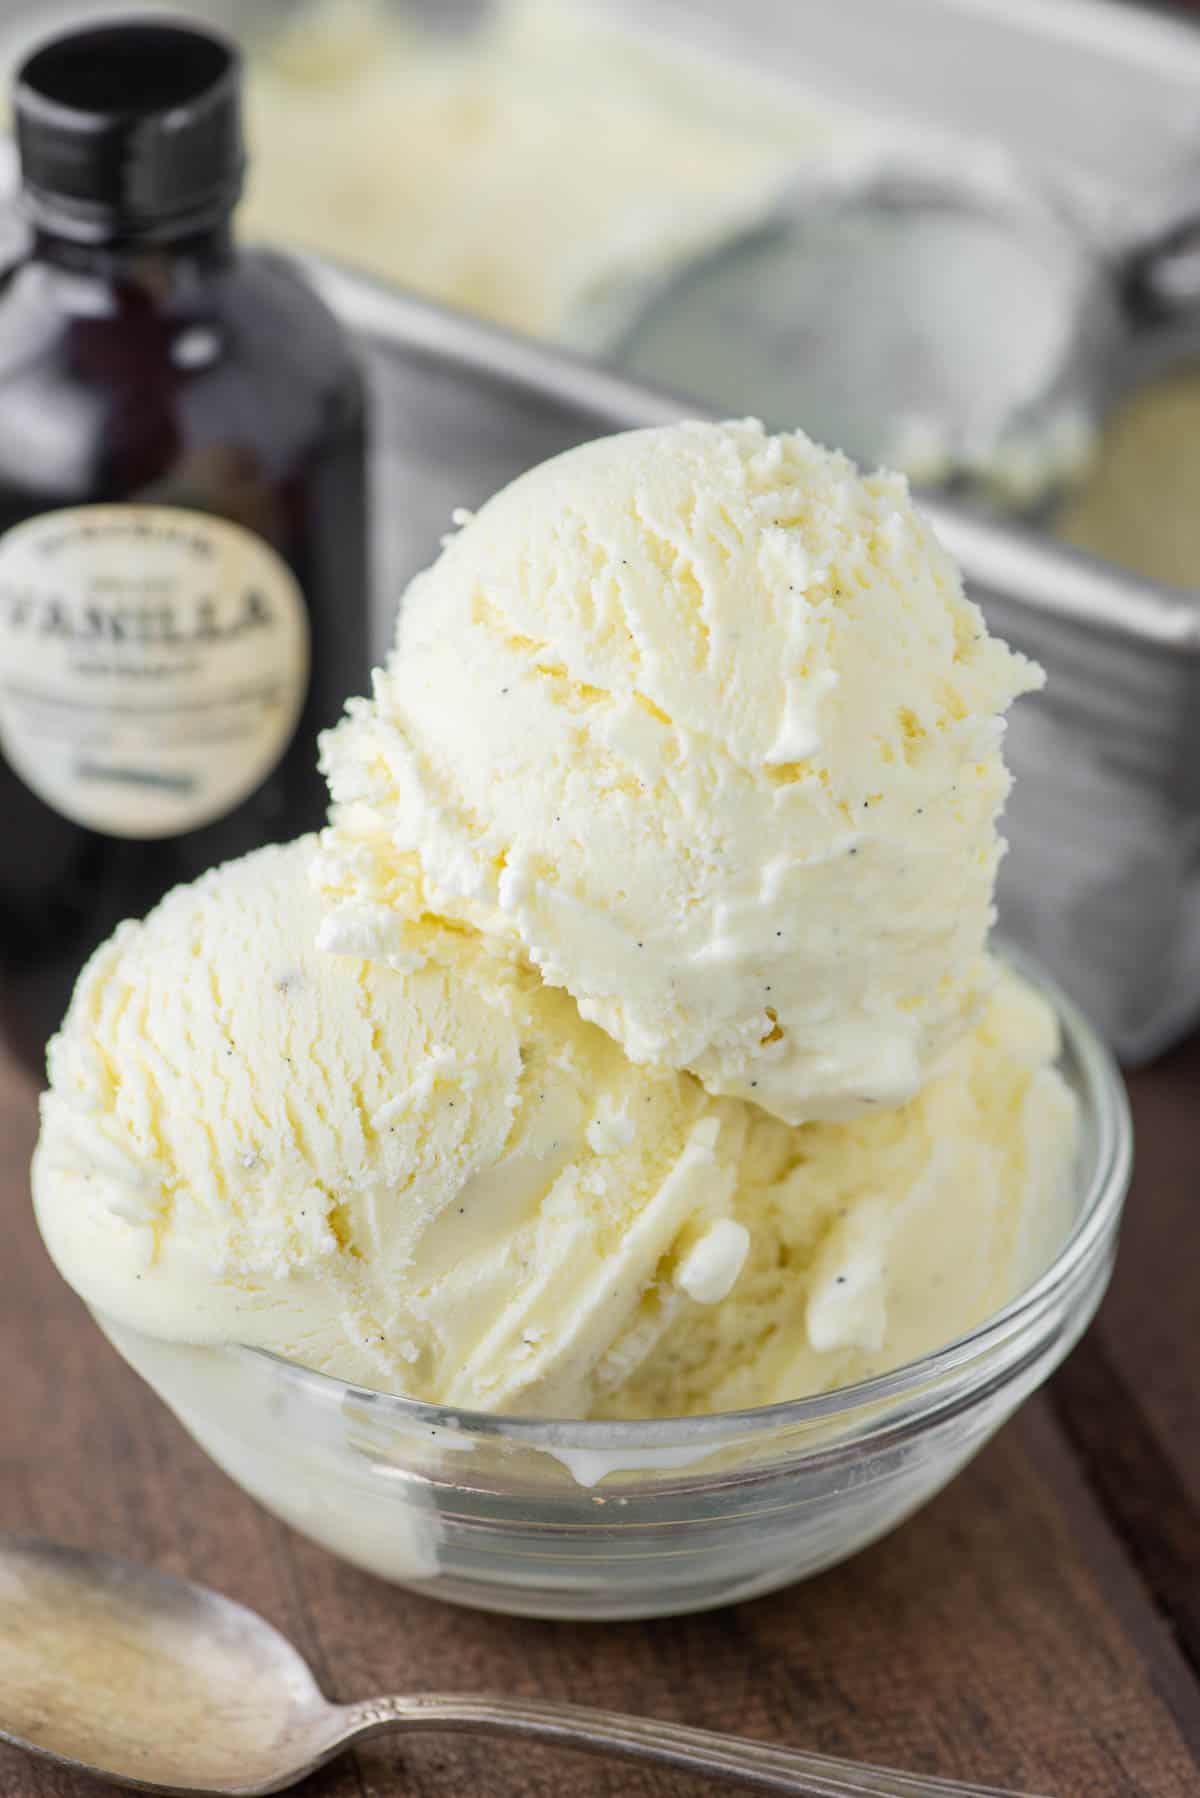 https://www.chiselandfork.com/wp-content/uploads/2022/09/vanilla-bean-ice-cream-2.jpg